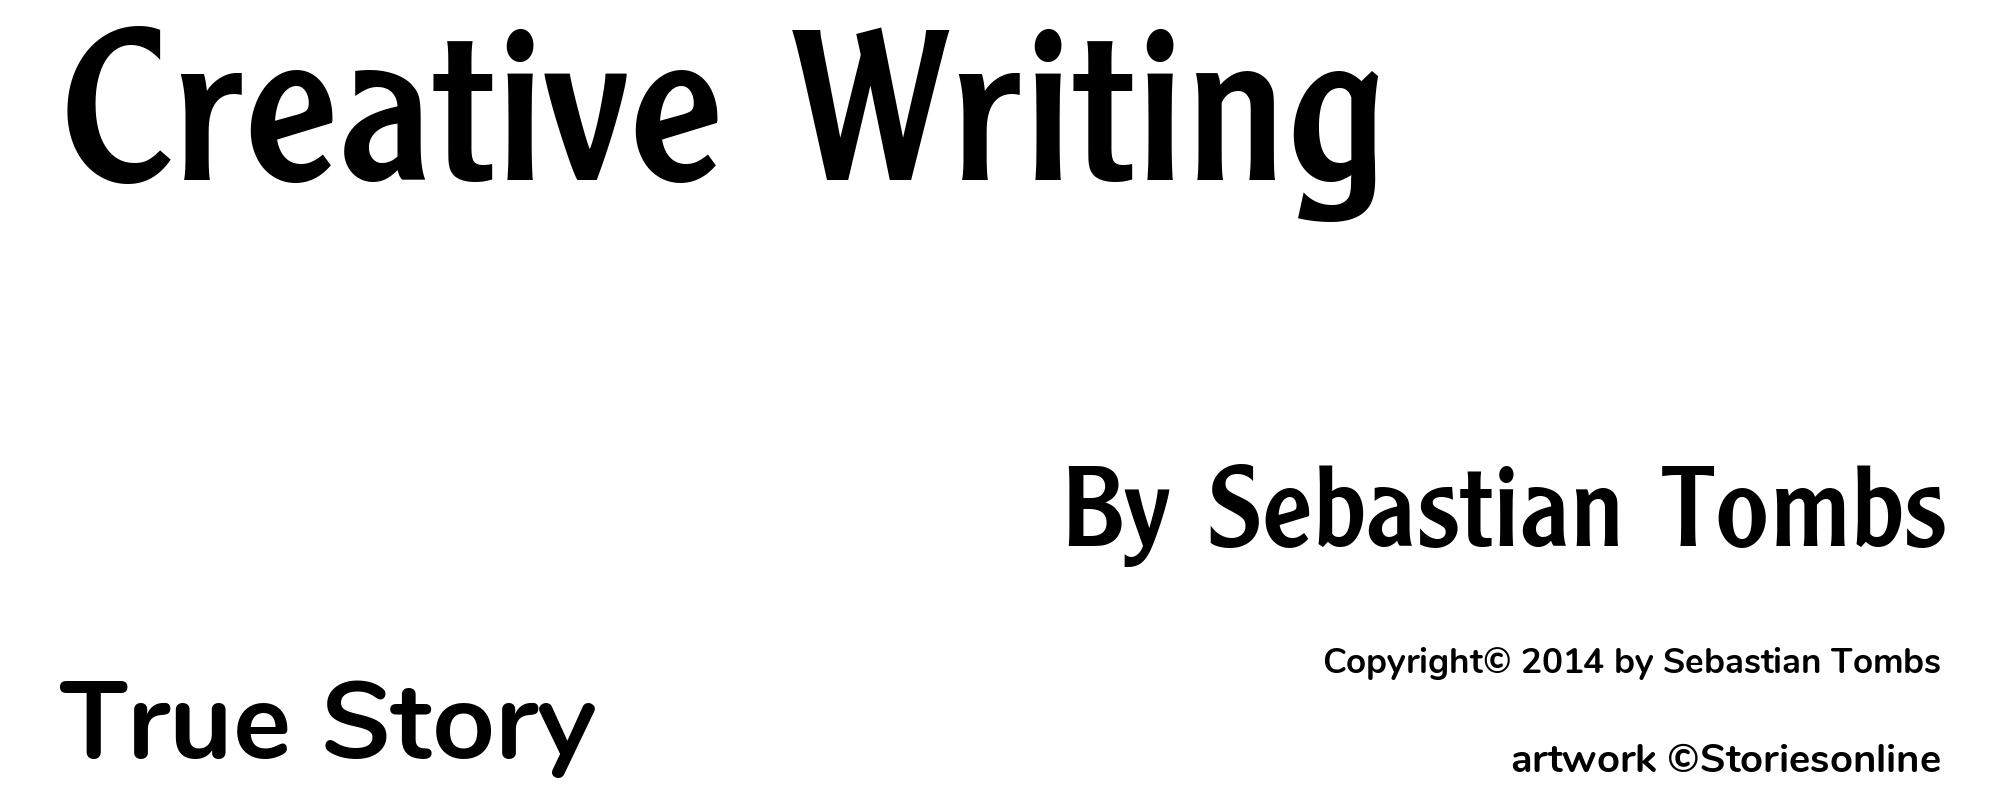 Creative Writing - Cover